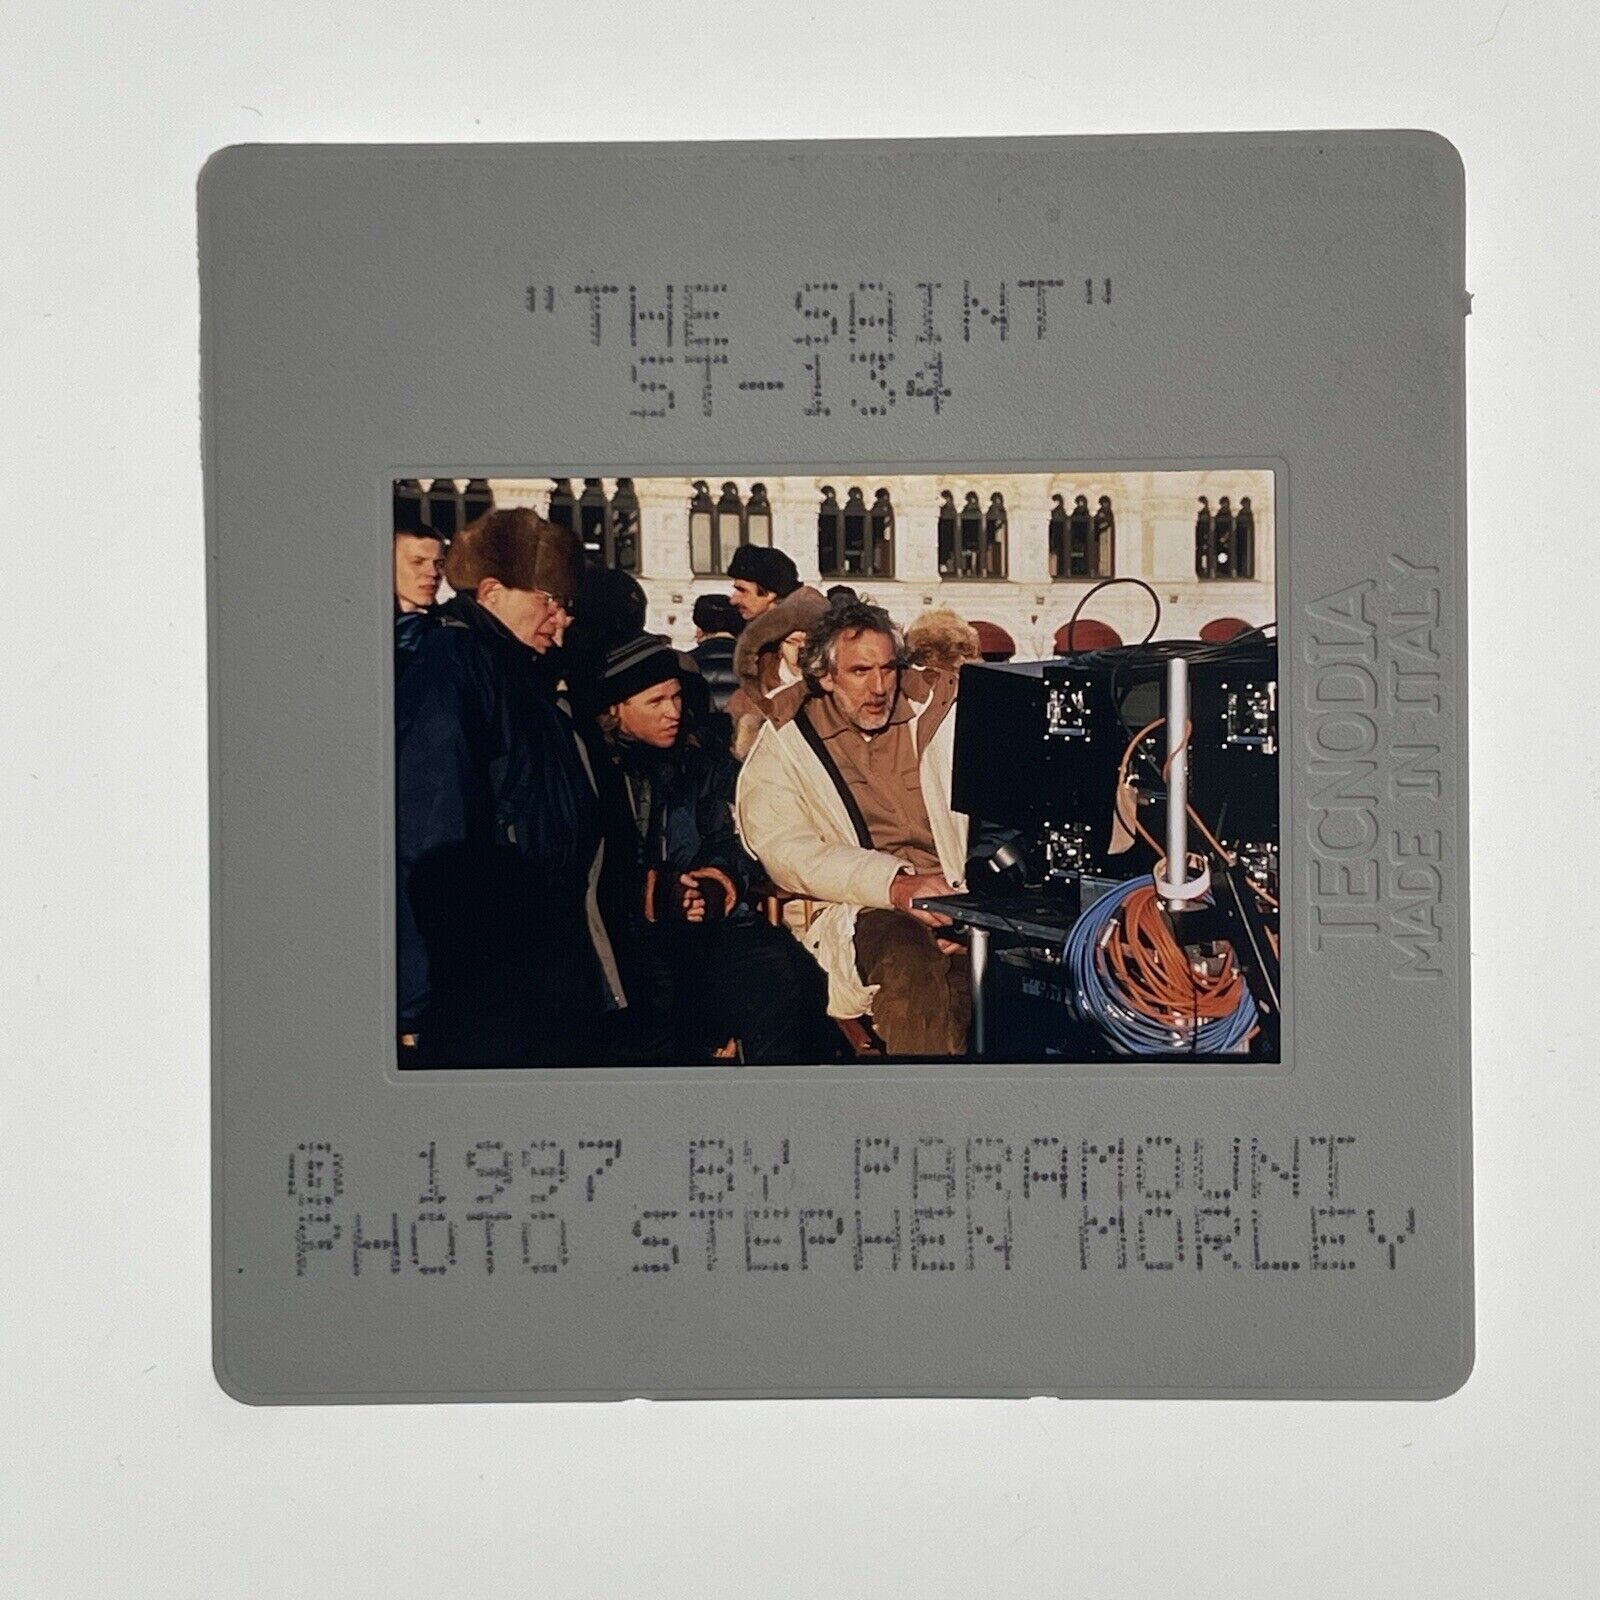 Film Director Phillip Noyce In The Saint 1997  Film S24817 35mm Slide SD10